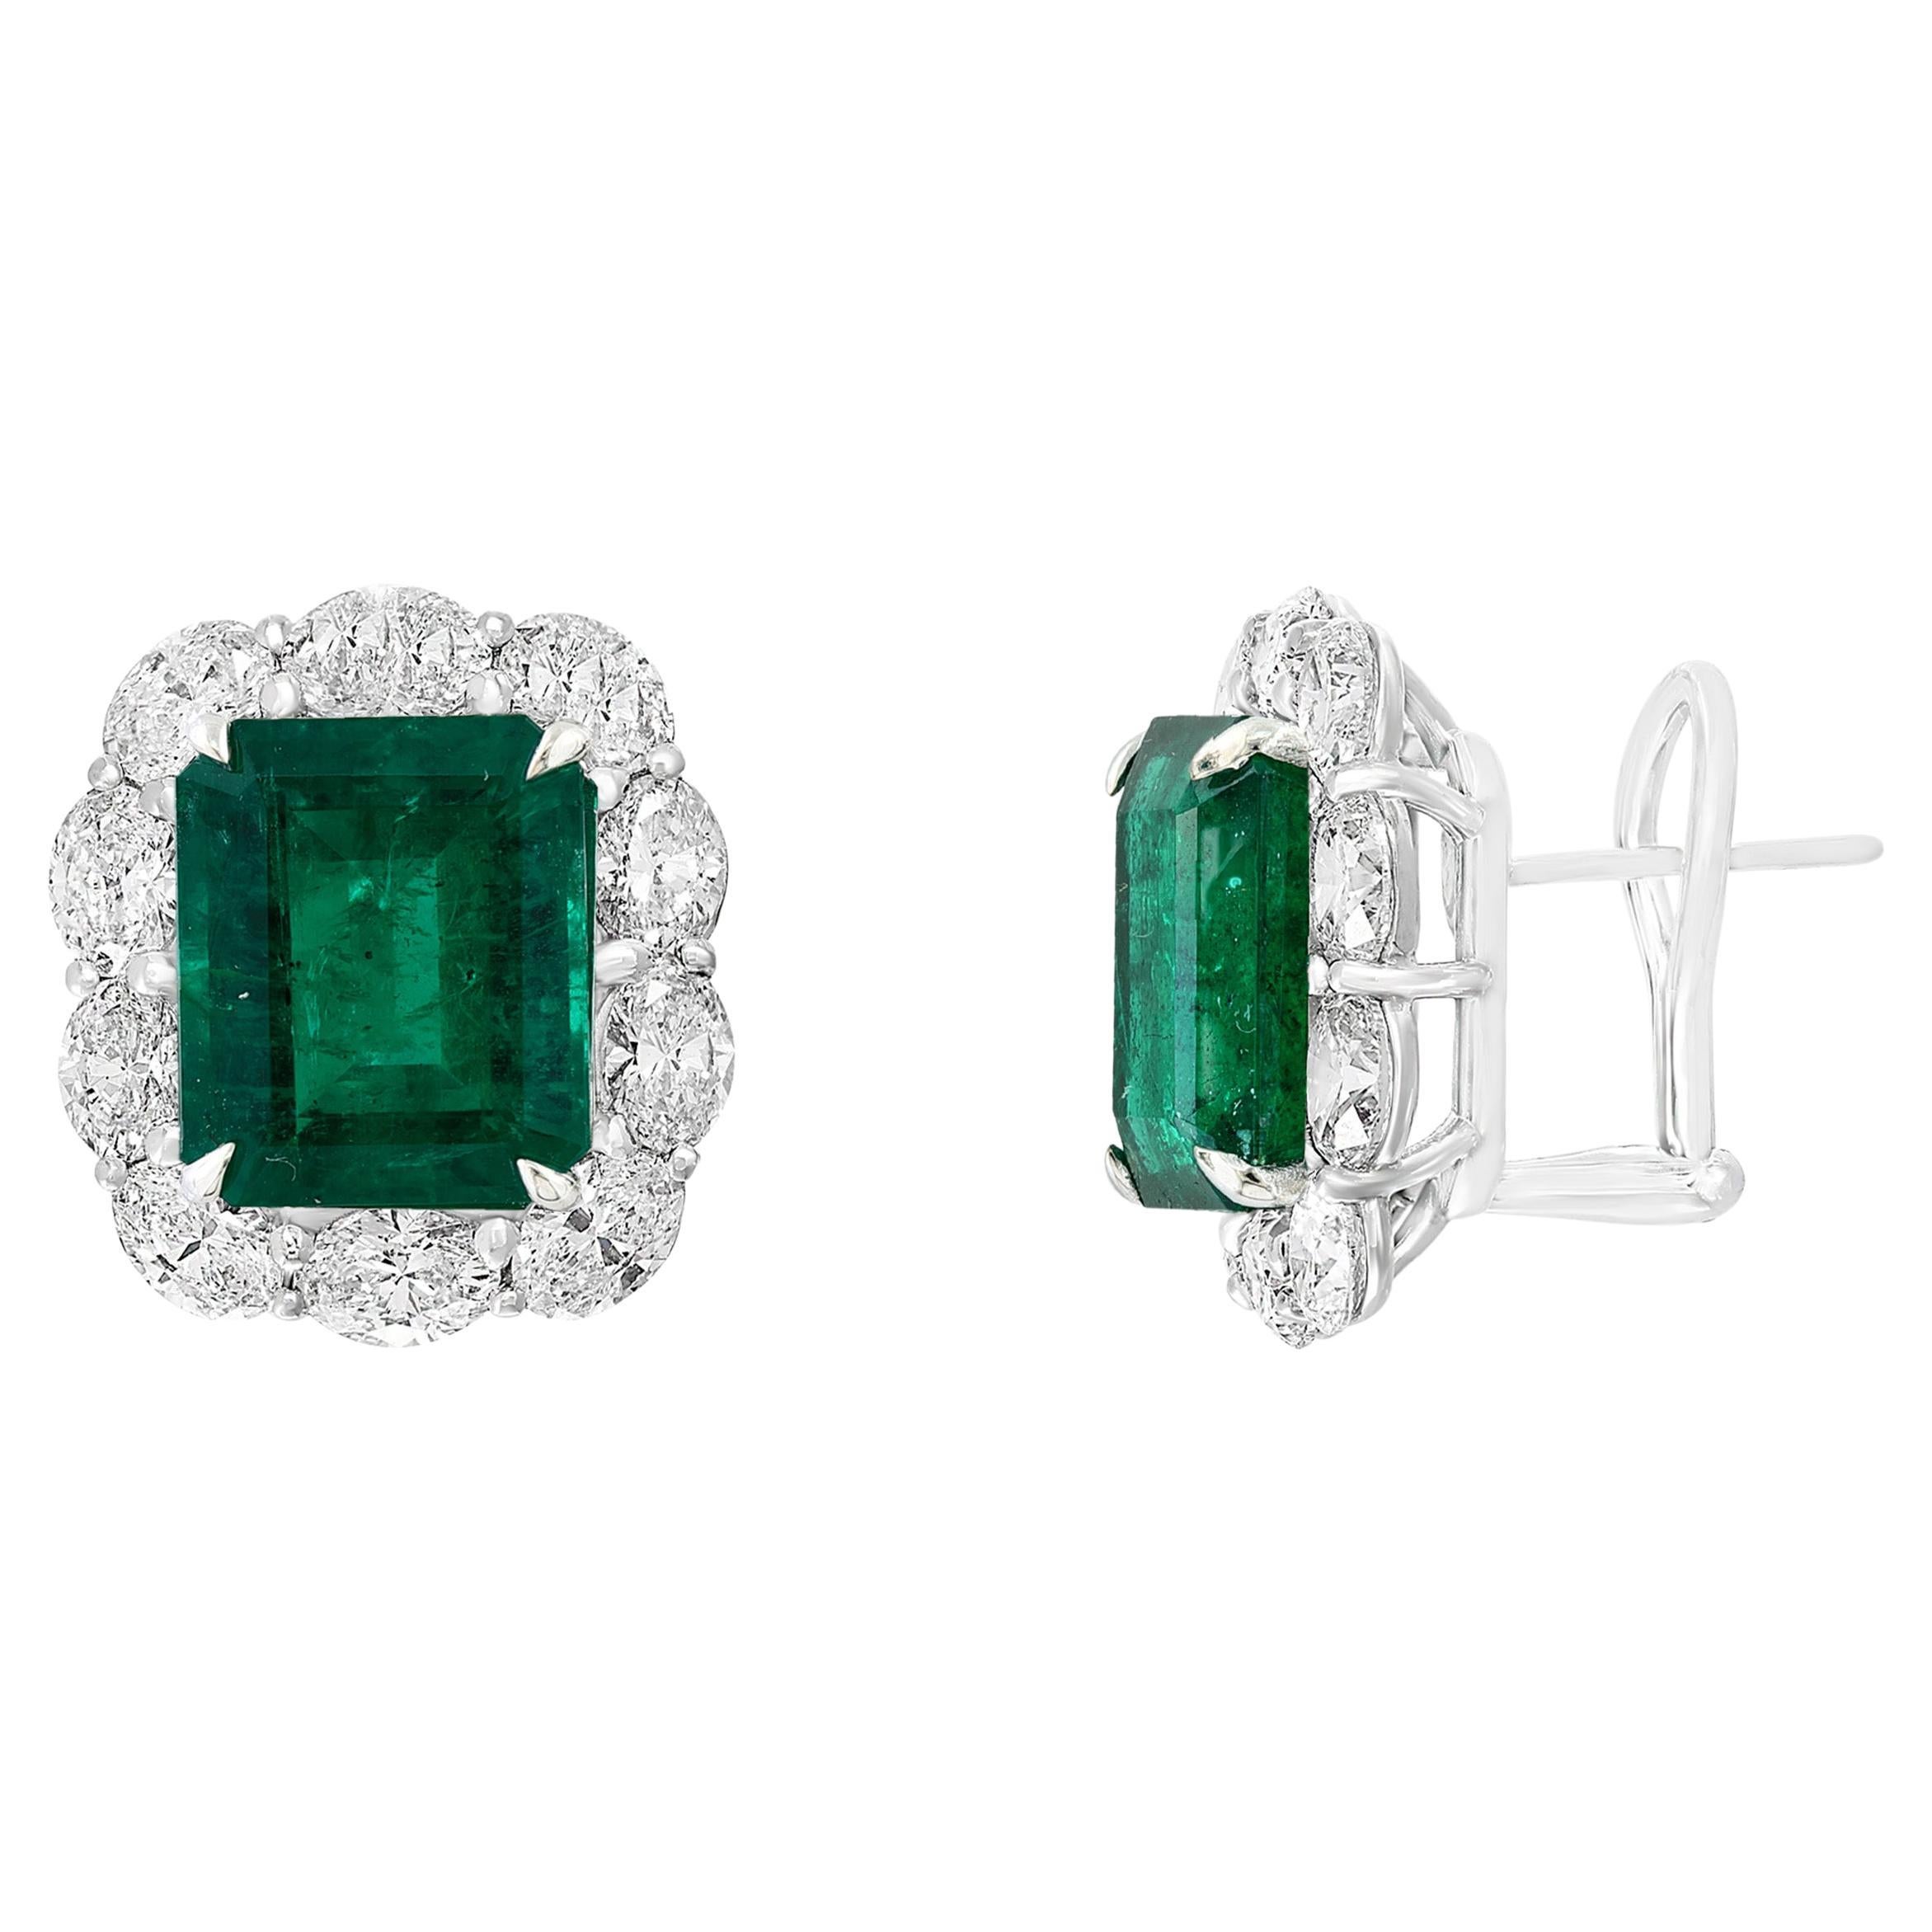 6.15 Carat Emerald Cut Emerald and Diamond Halo Earring in 18K White Gold